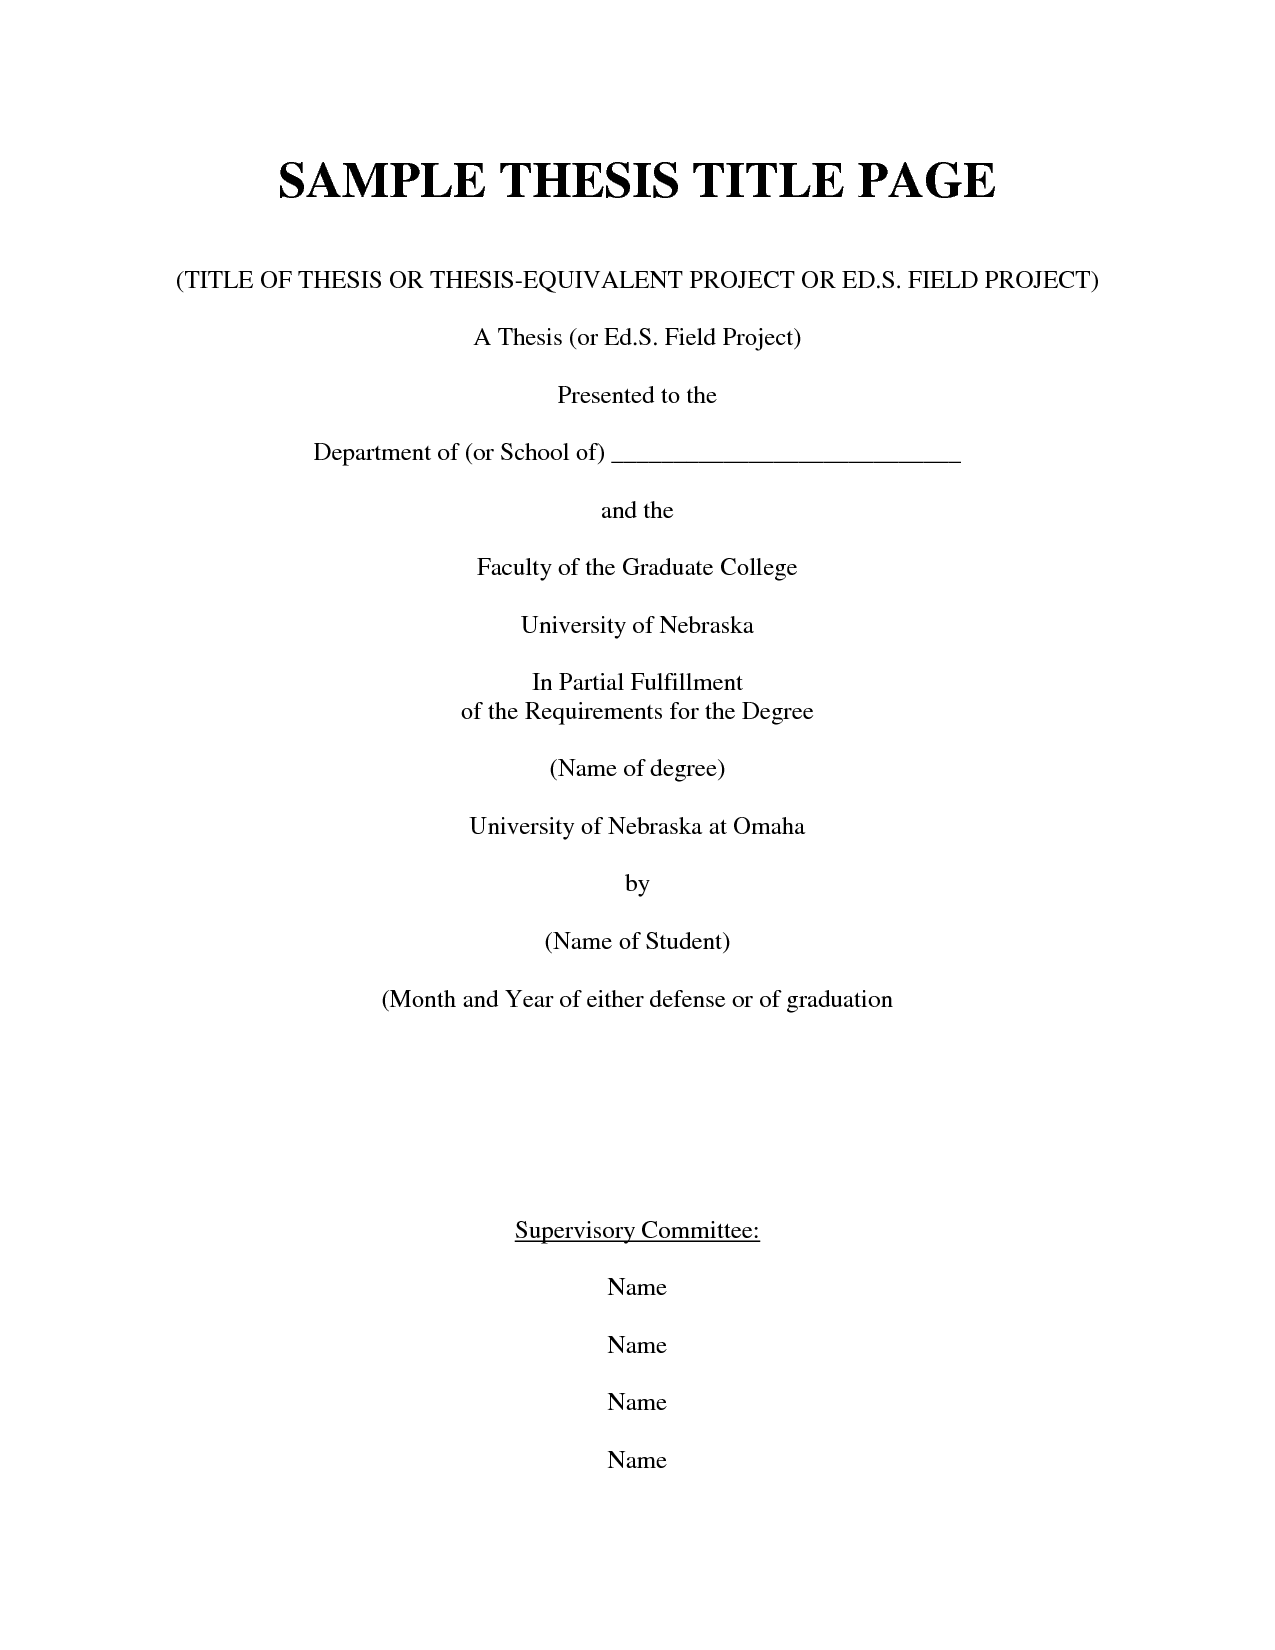 university of york dissertation format